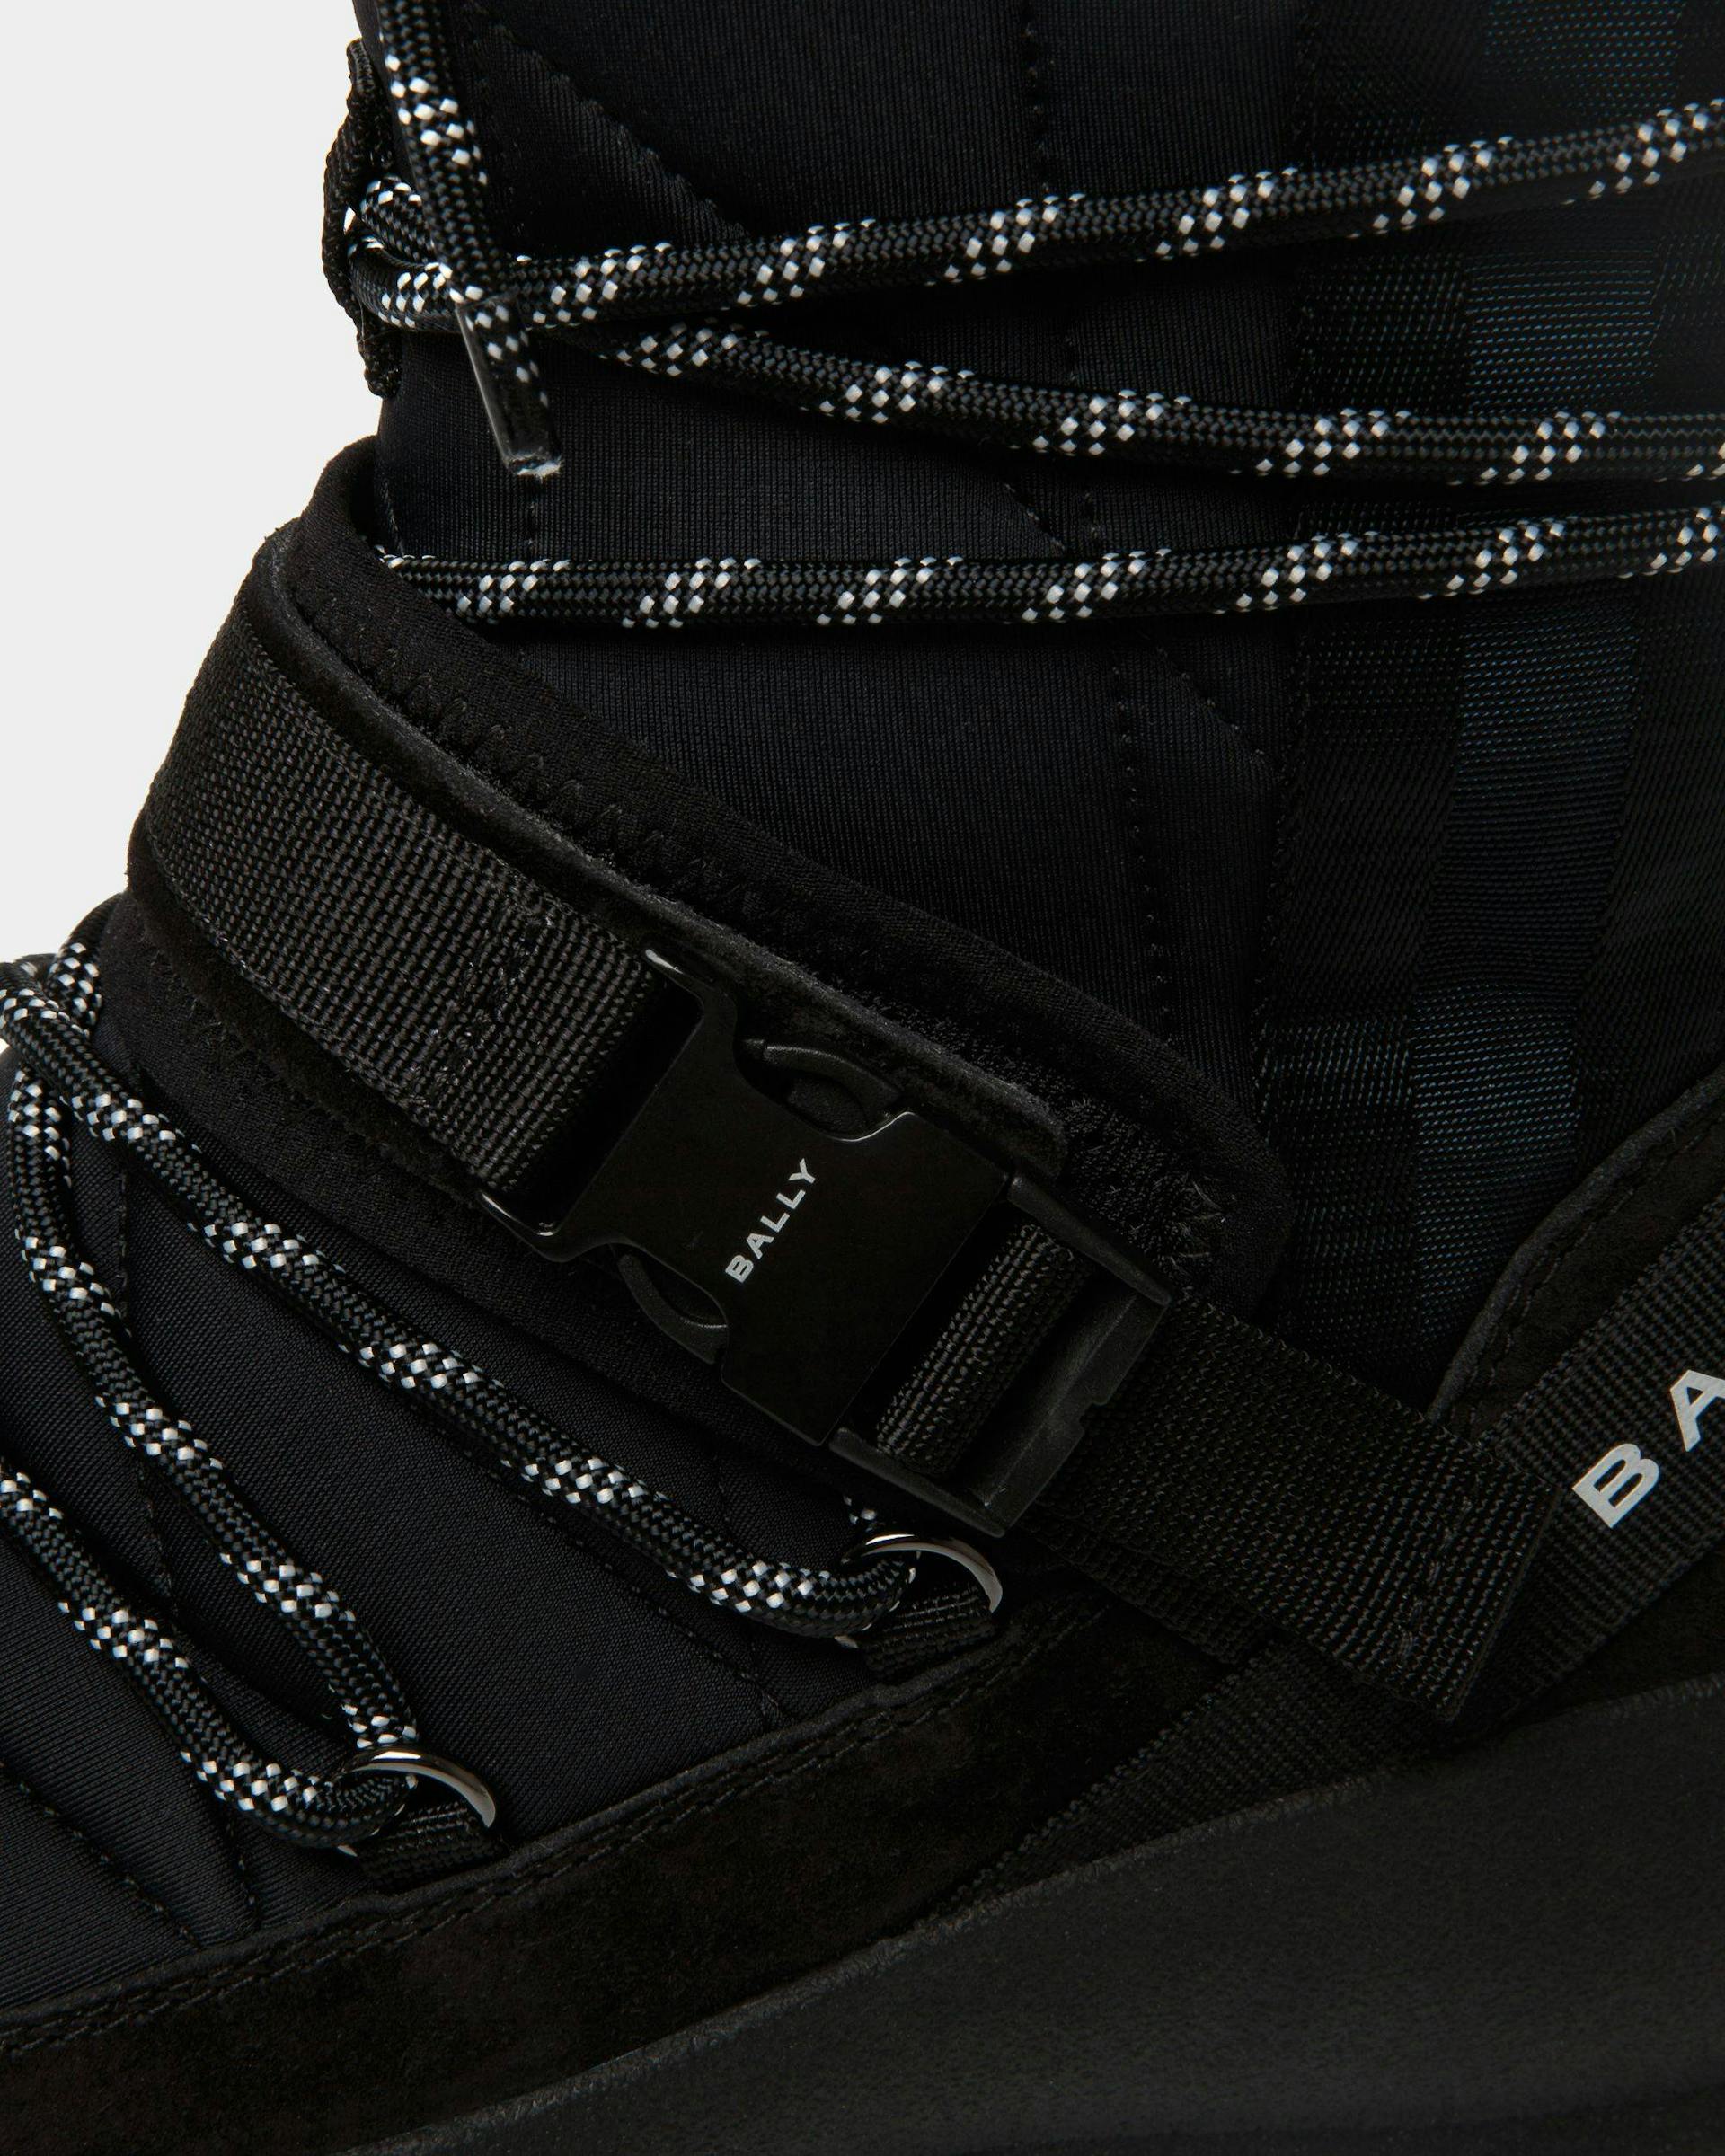 Men's Frei Lace-Up Boot In Black Nylon | Bally | Still Life Detail